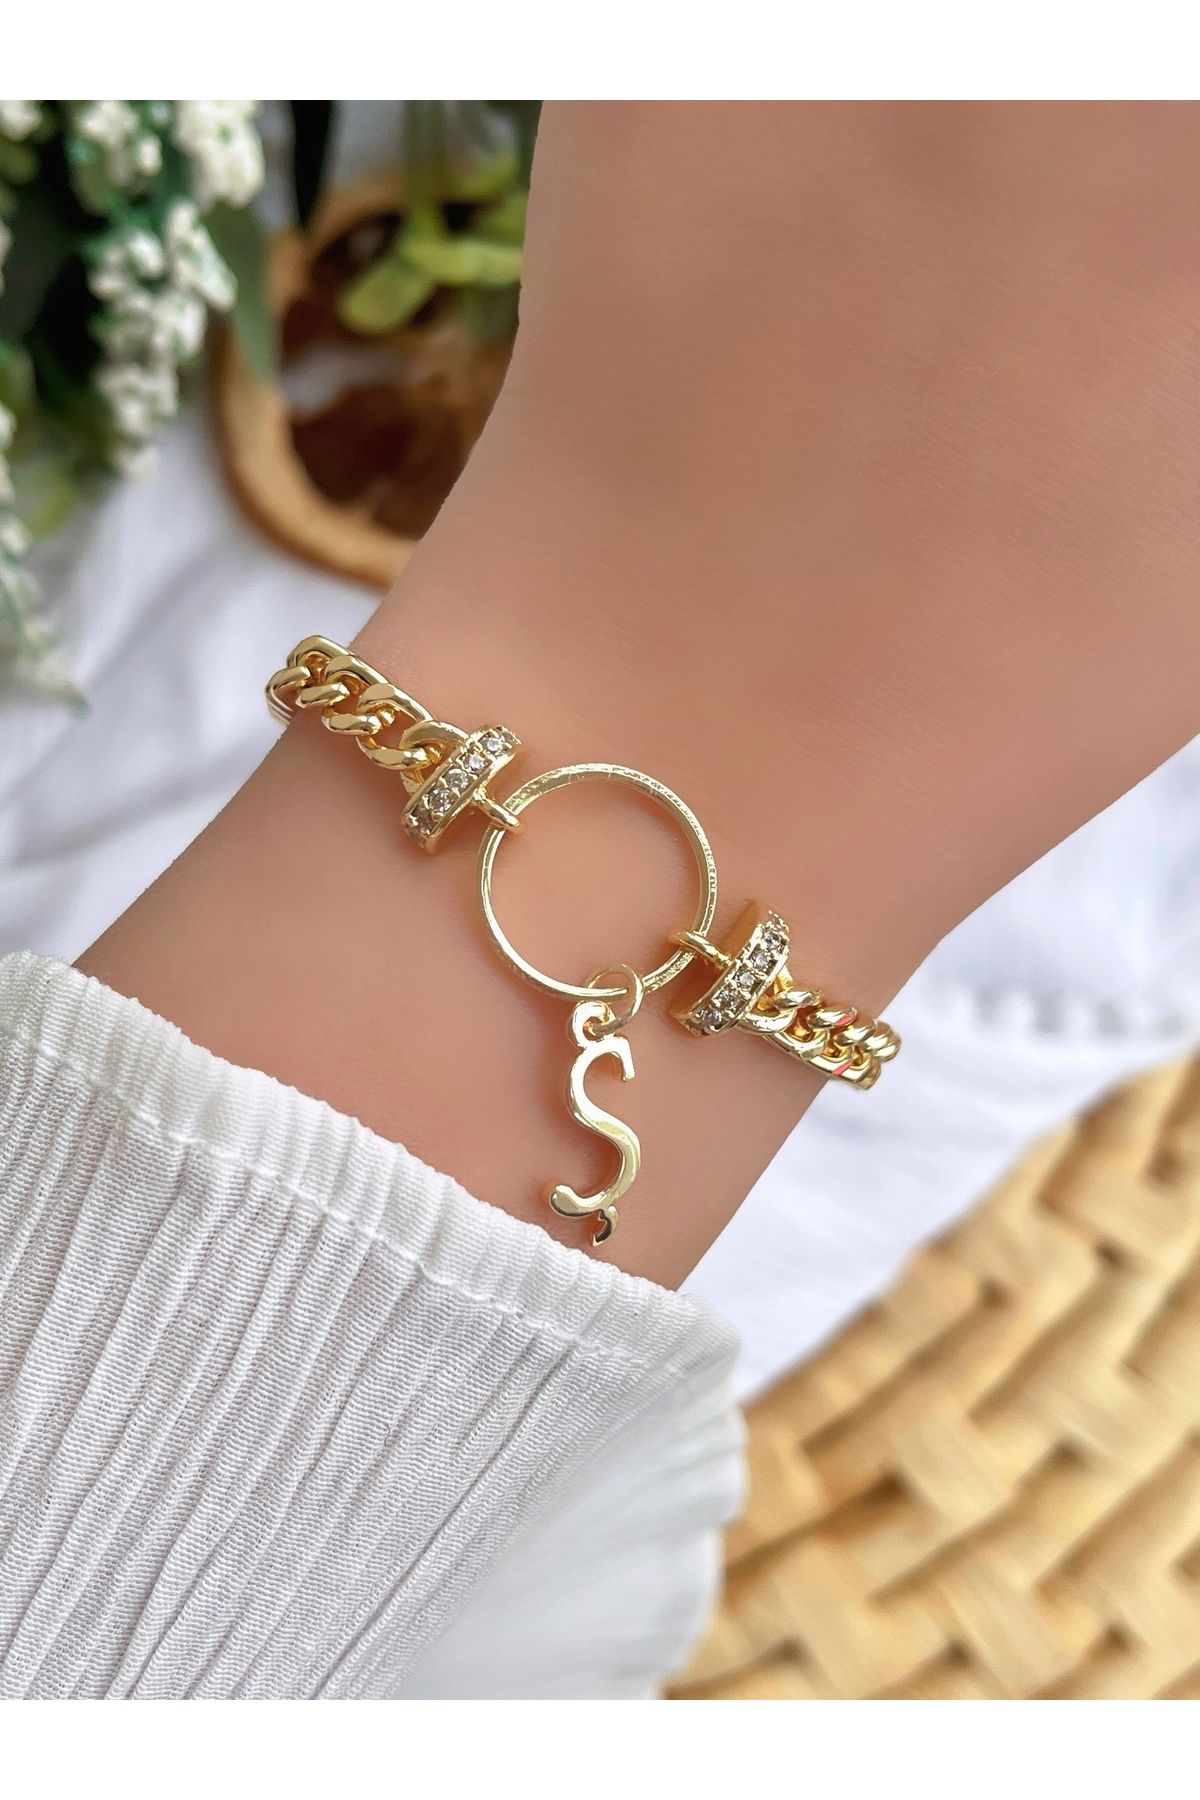 Friendship Bracelets - Alphabet Name Initial Charm Friendship String  Bracelets | Lovers bracelet, Letter bracelet, Friendship bracelets